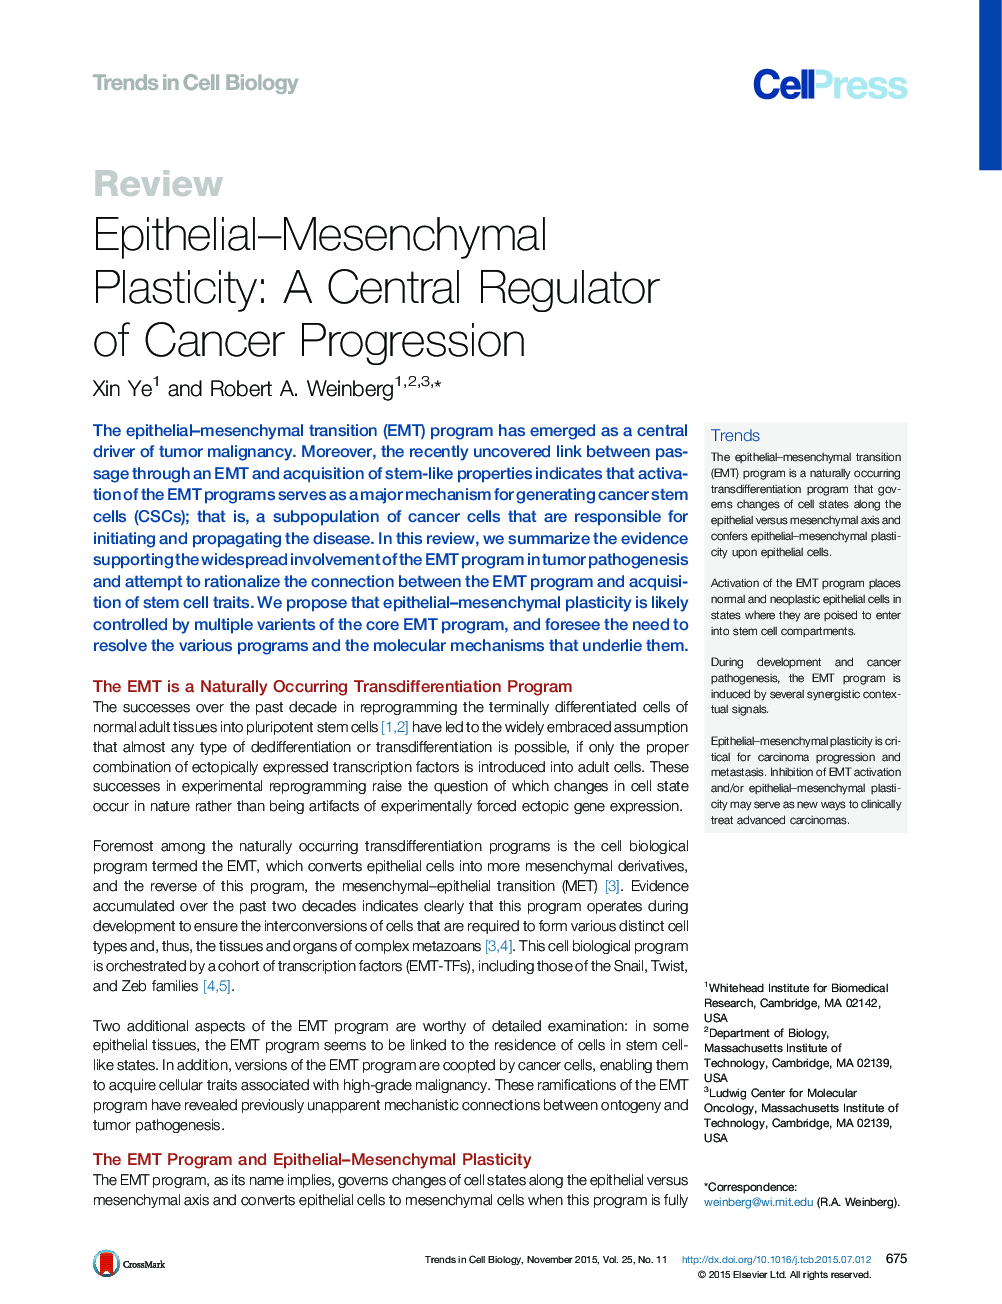 Epithelial–Mesenchymal Plasticity: A Central Regulator of Cancer Progression